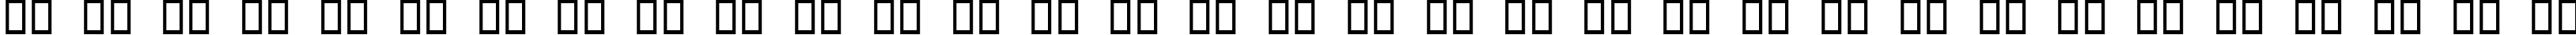 Пример написания русского алфавита шрифтом Chewed Straw